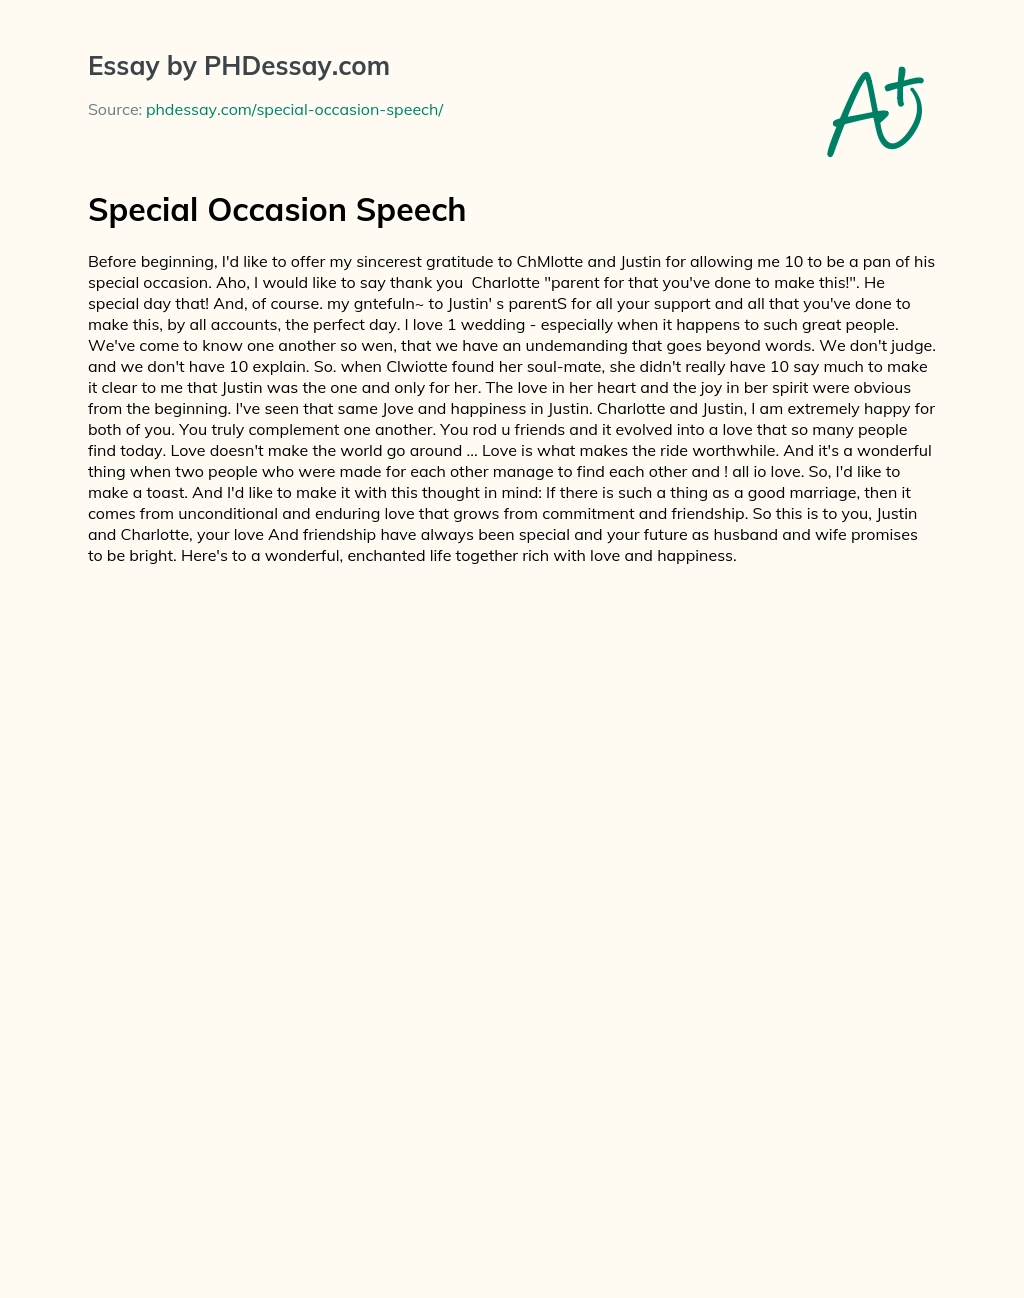 Special Occasion Speech essay